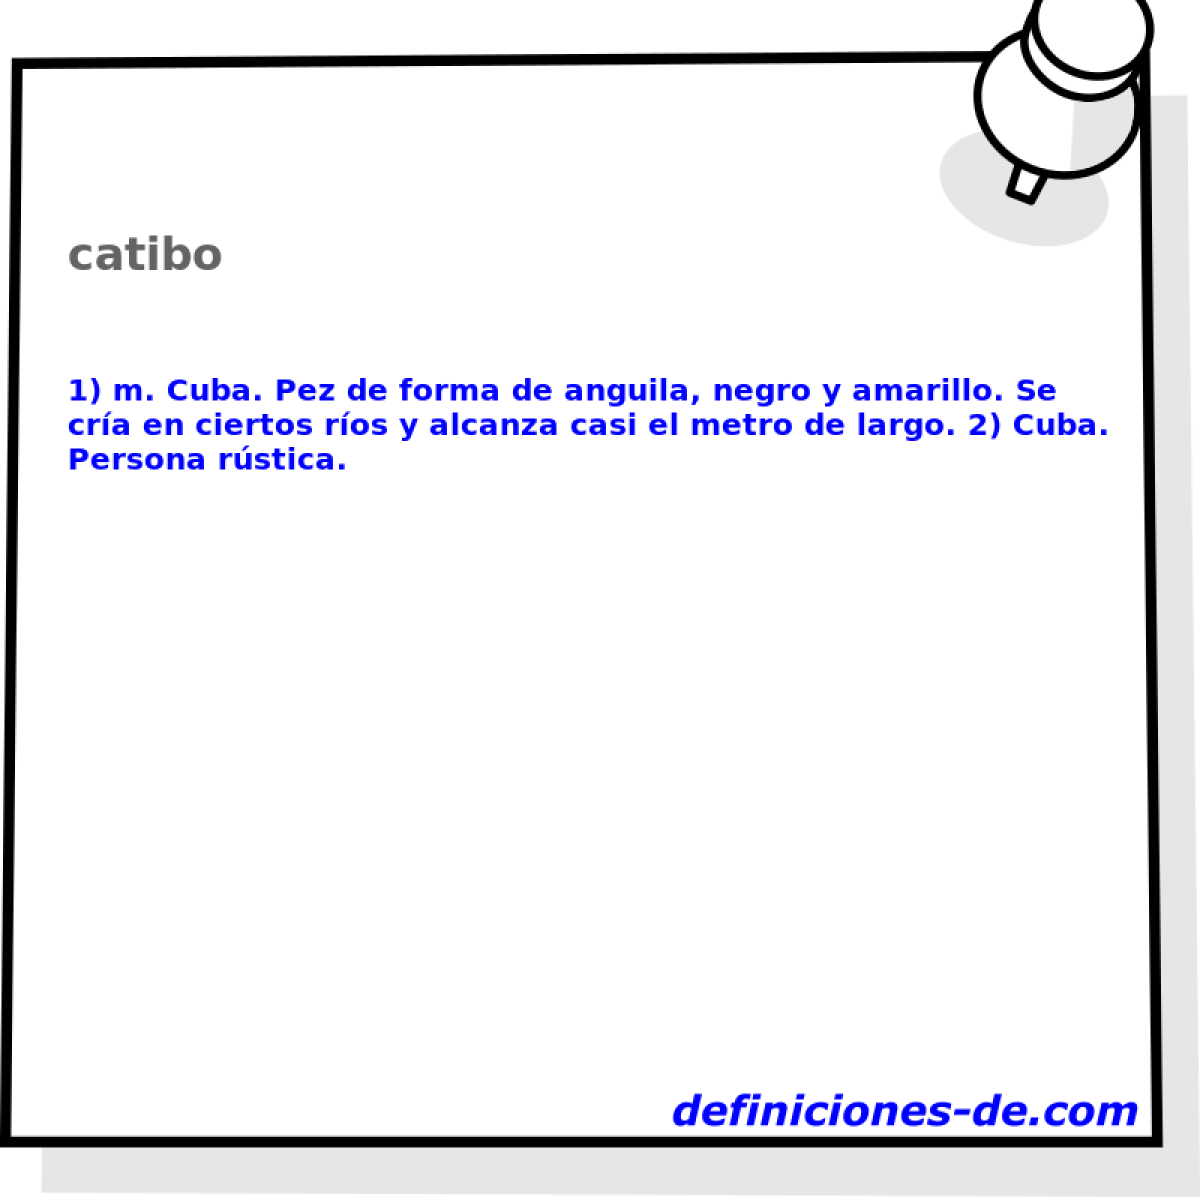 catibo 